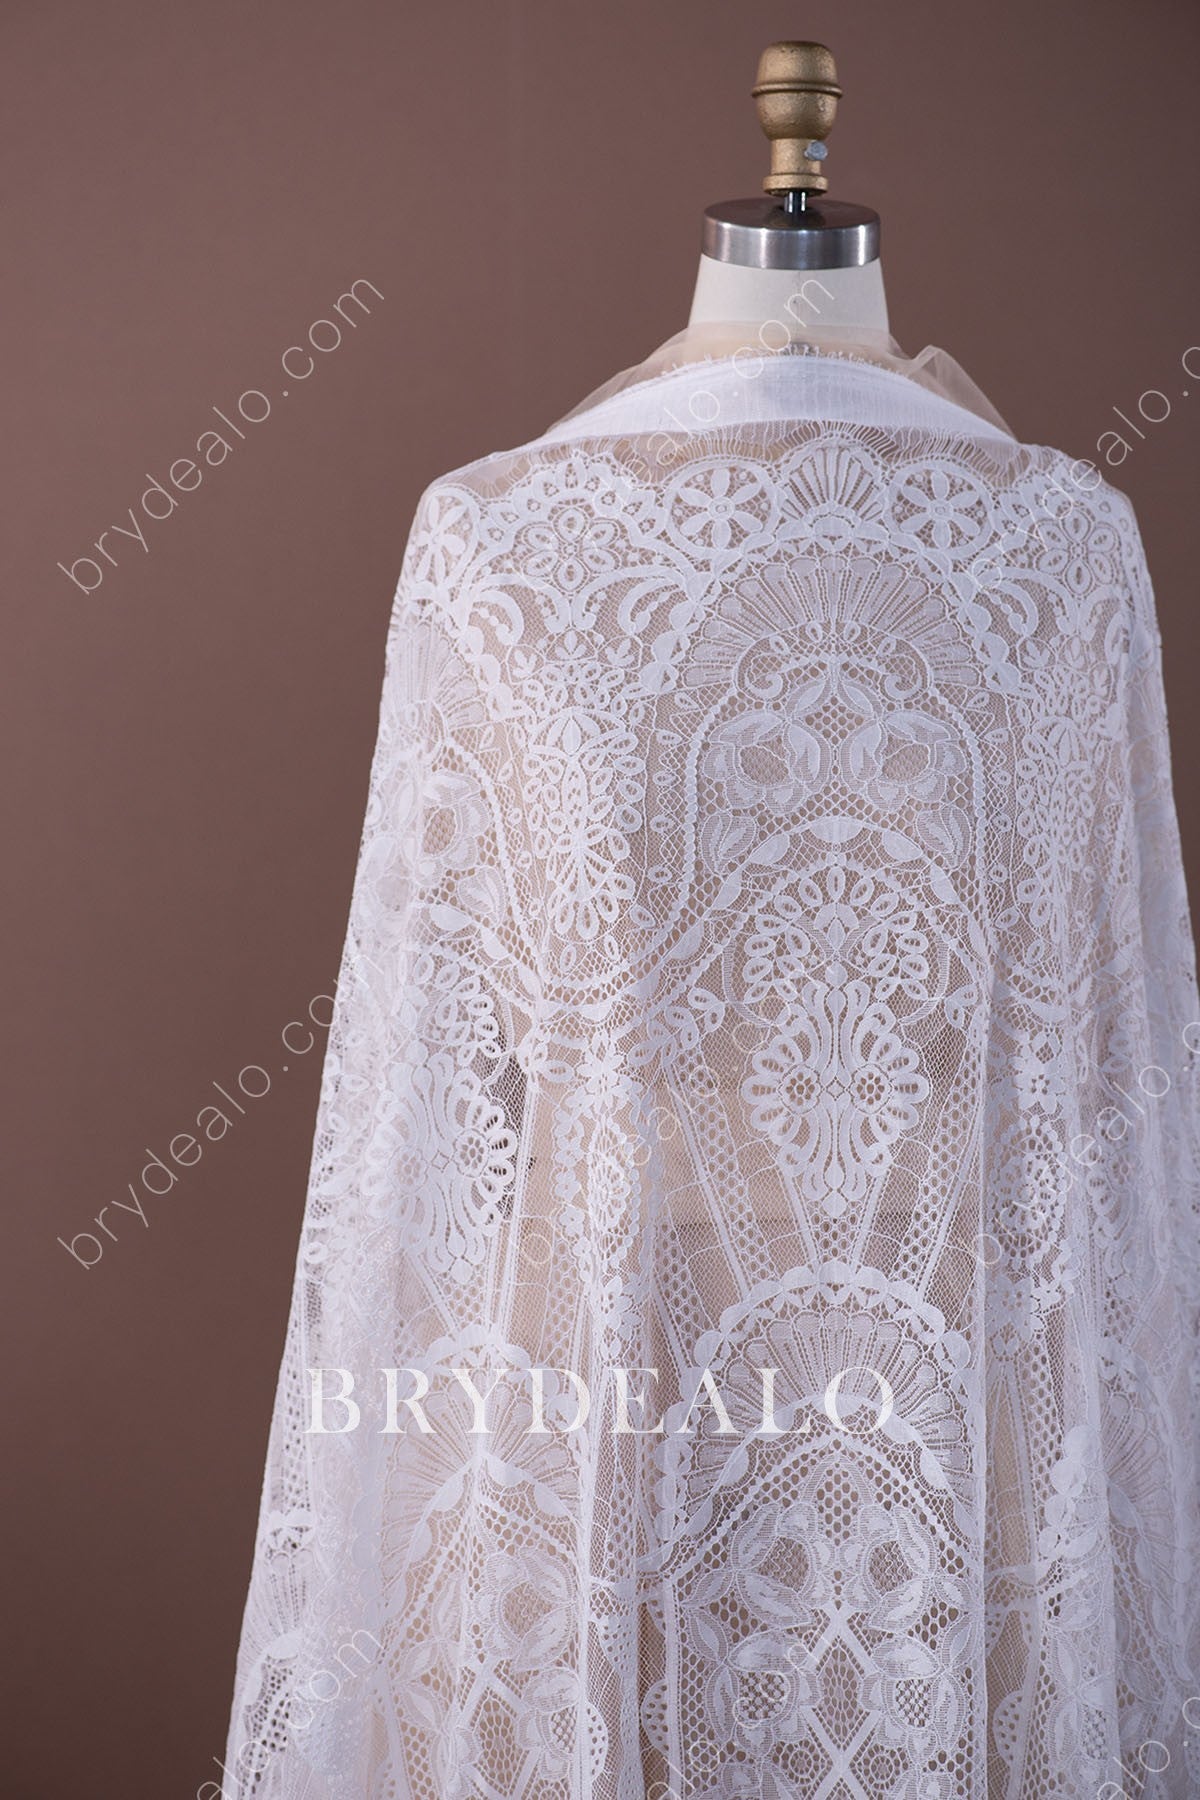 Best Symmetrical Pattern Crochet Bridal Lace Fabric